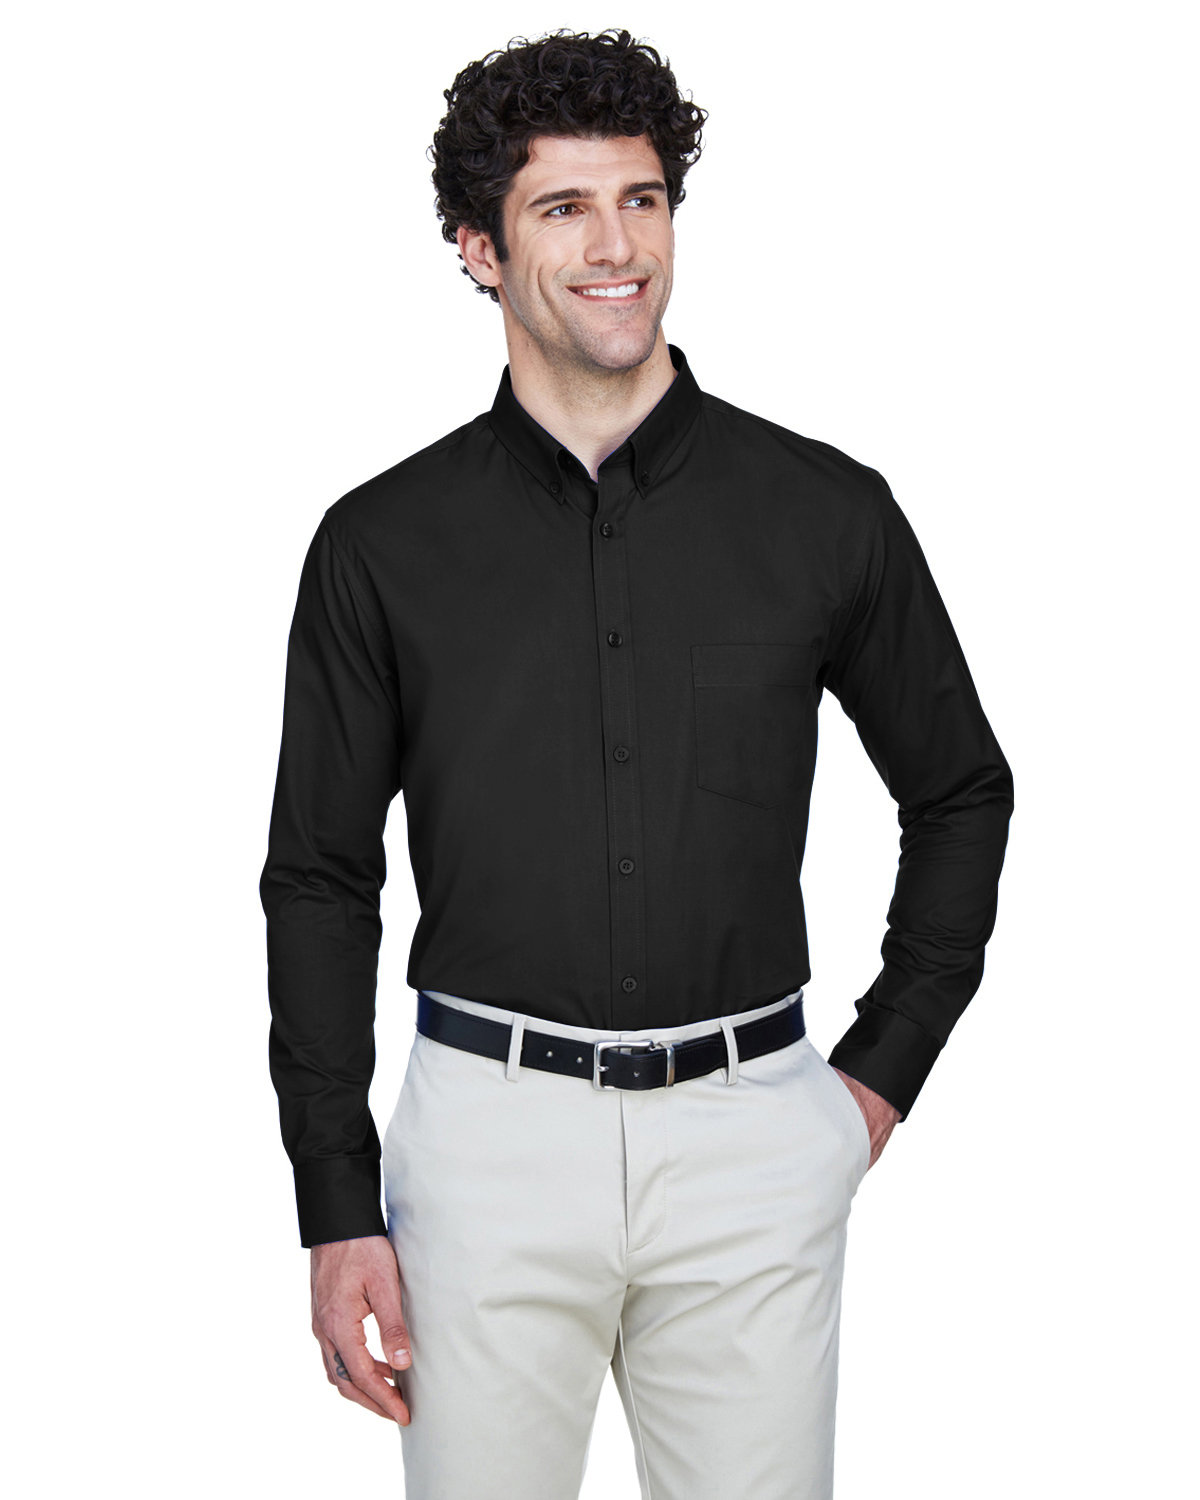 CORE365 Men's Operate Long-Sleeve Twill Shirt BLACK 